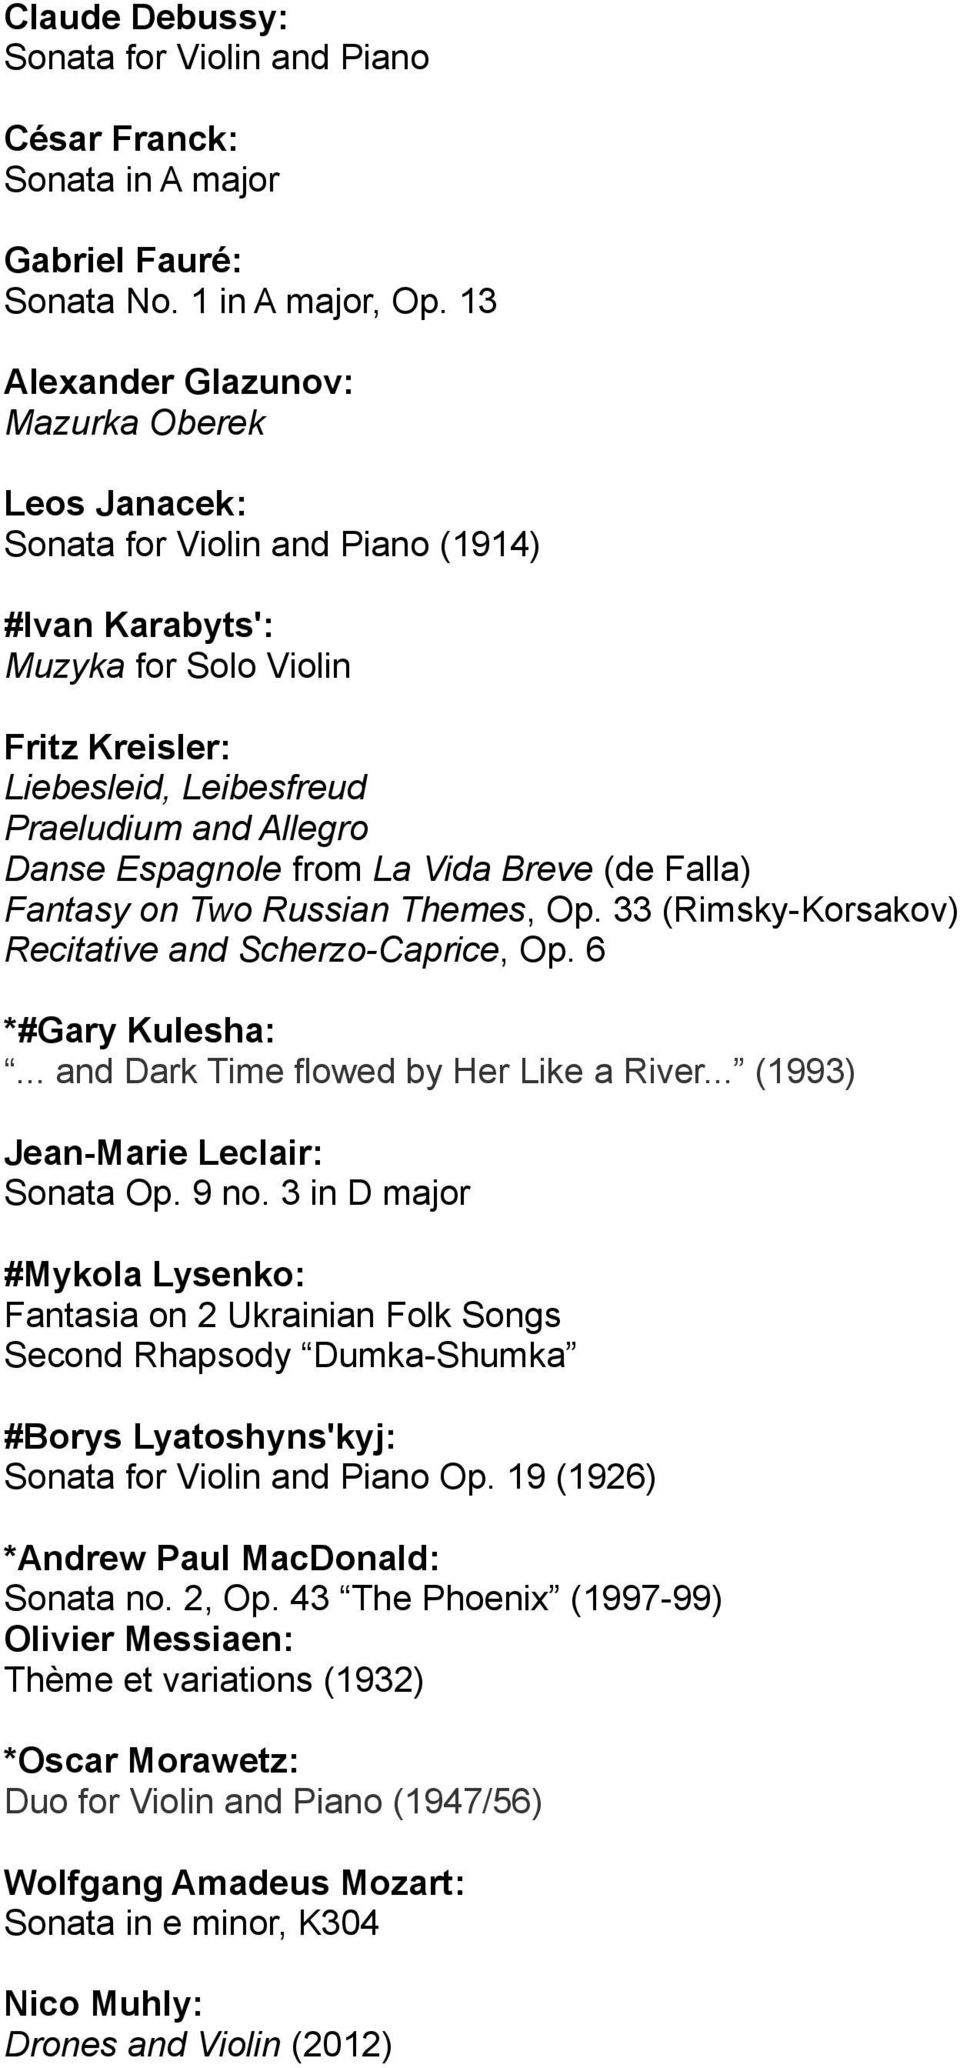 Espagnole from La Vida Breve (de Falla) Fantasy on Two Russian Themes, Op. 33 (Rimsky-Korsakov) Recitative and Scherzo-Caprice, Op. 6 *#Gary Kulesha:... and Dark Time flowed by Her Like a River.